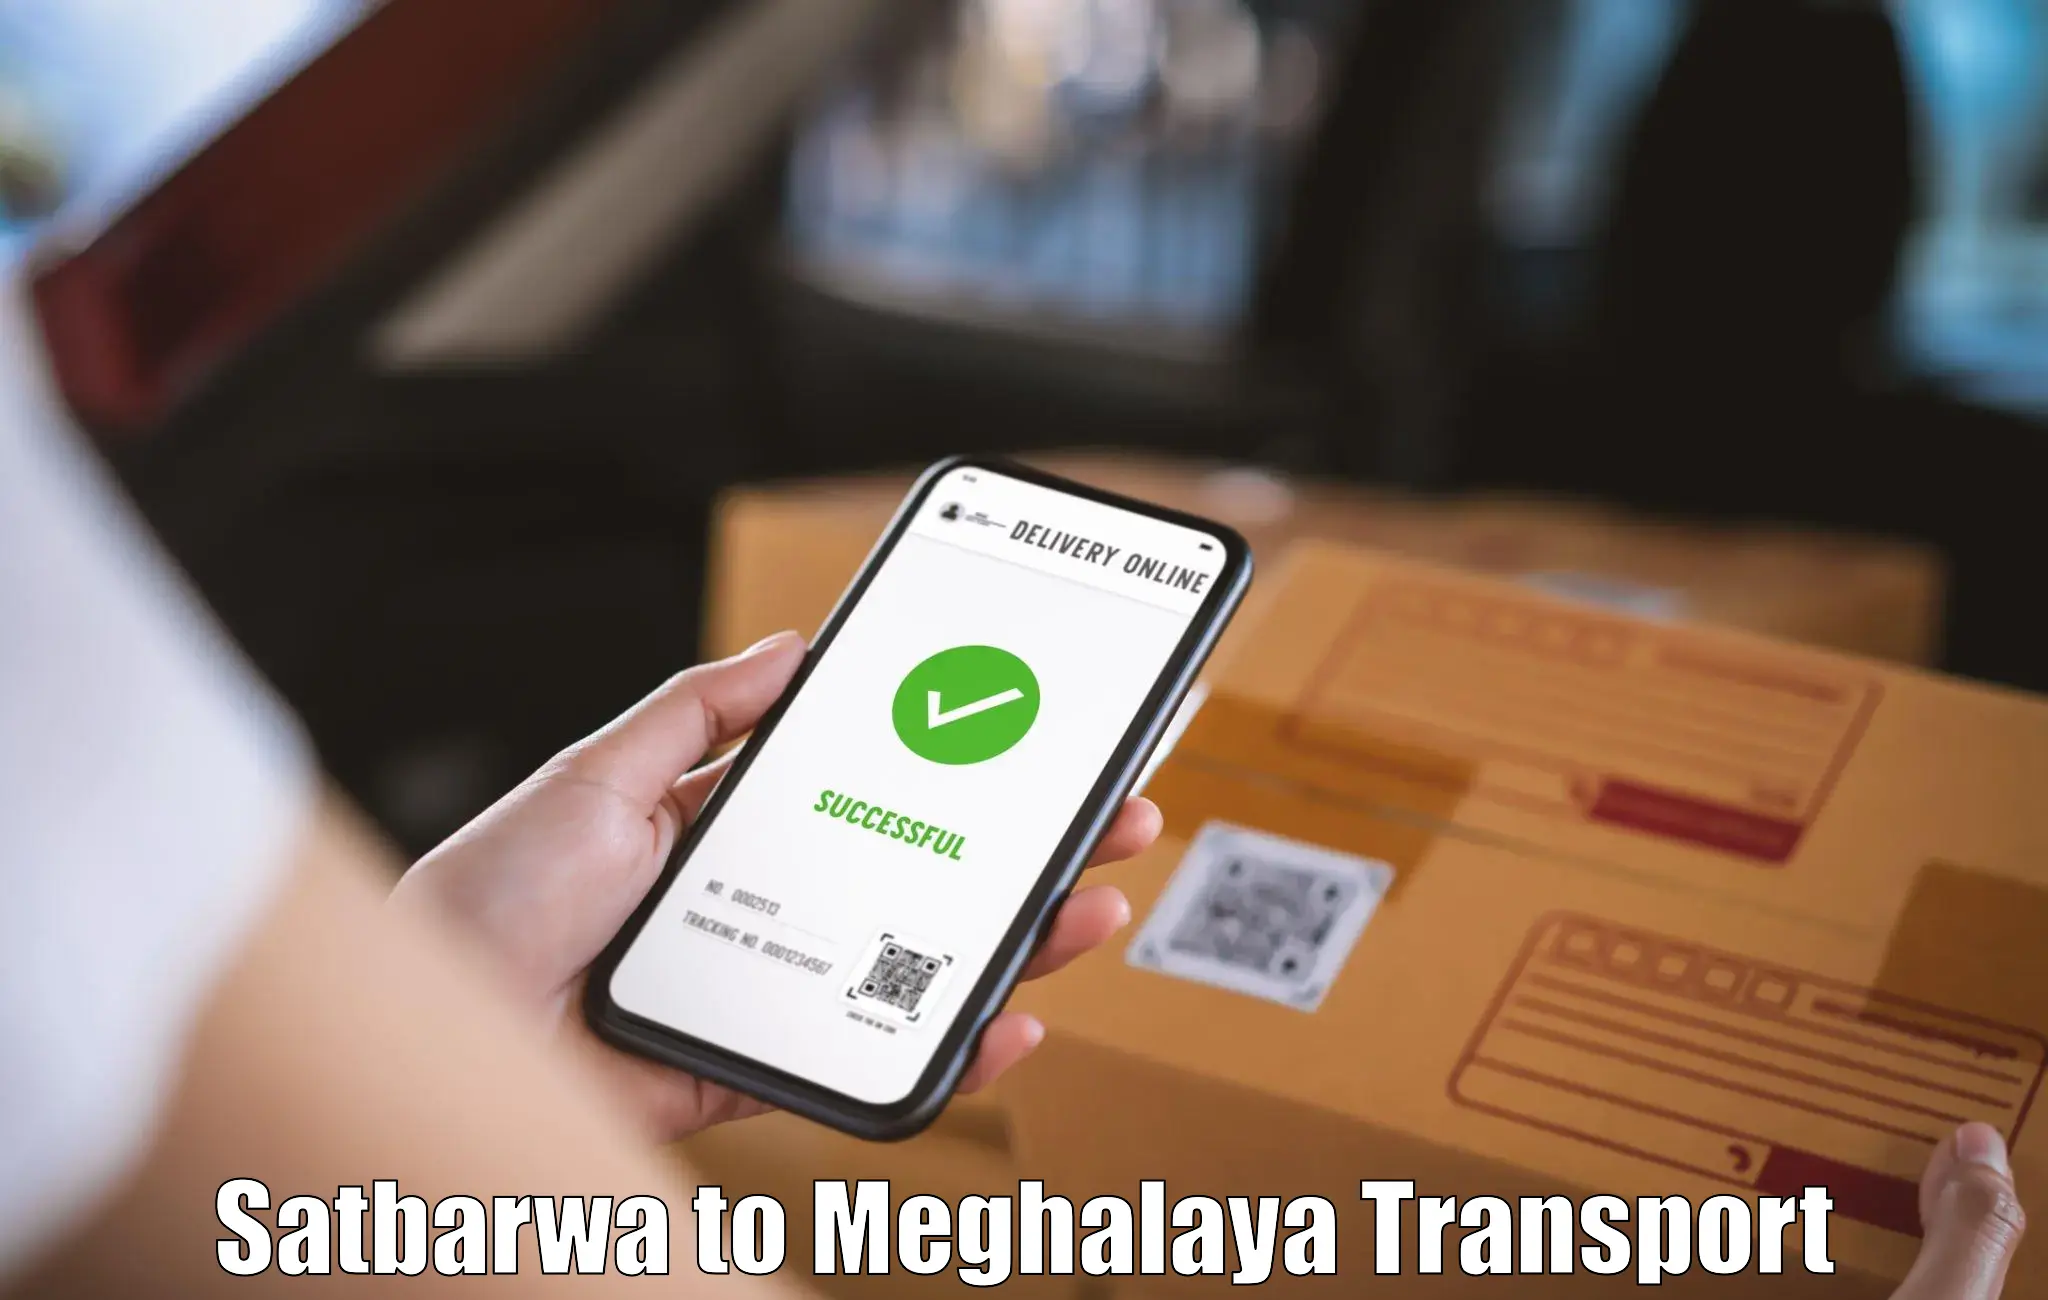 Daily transport service Satbarwa to Meghalaya